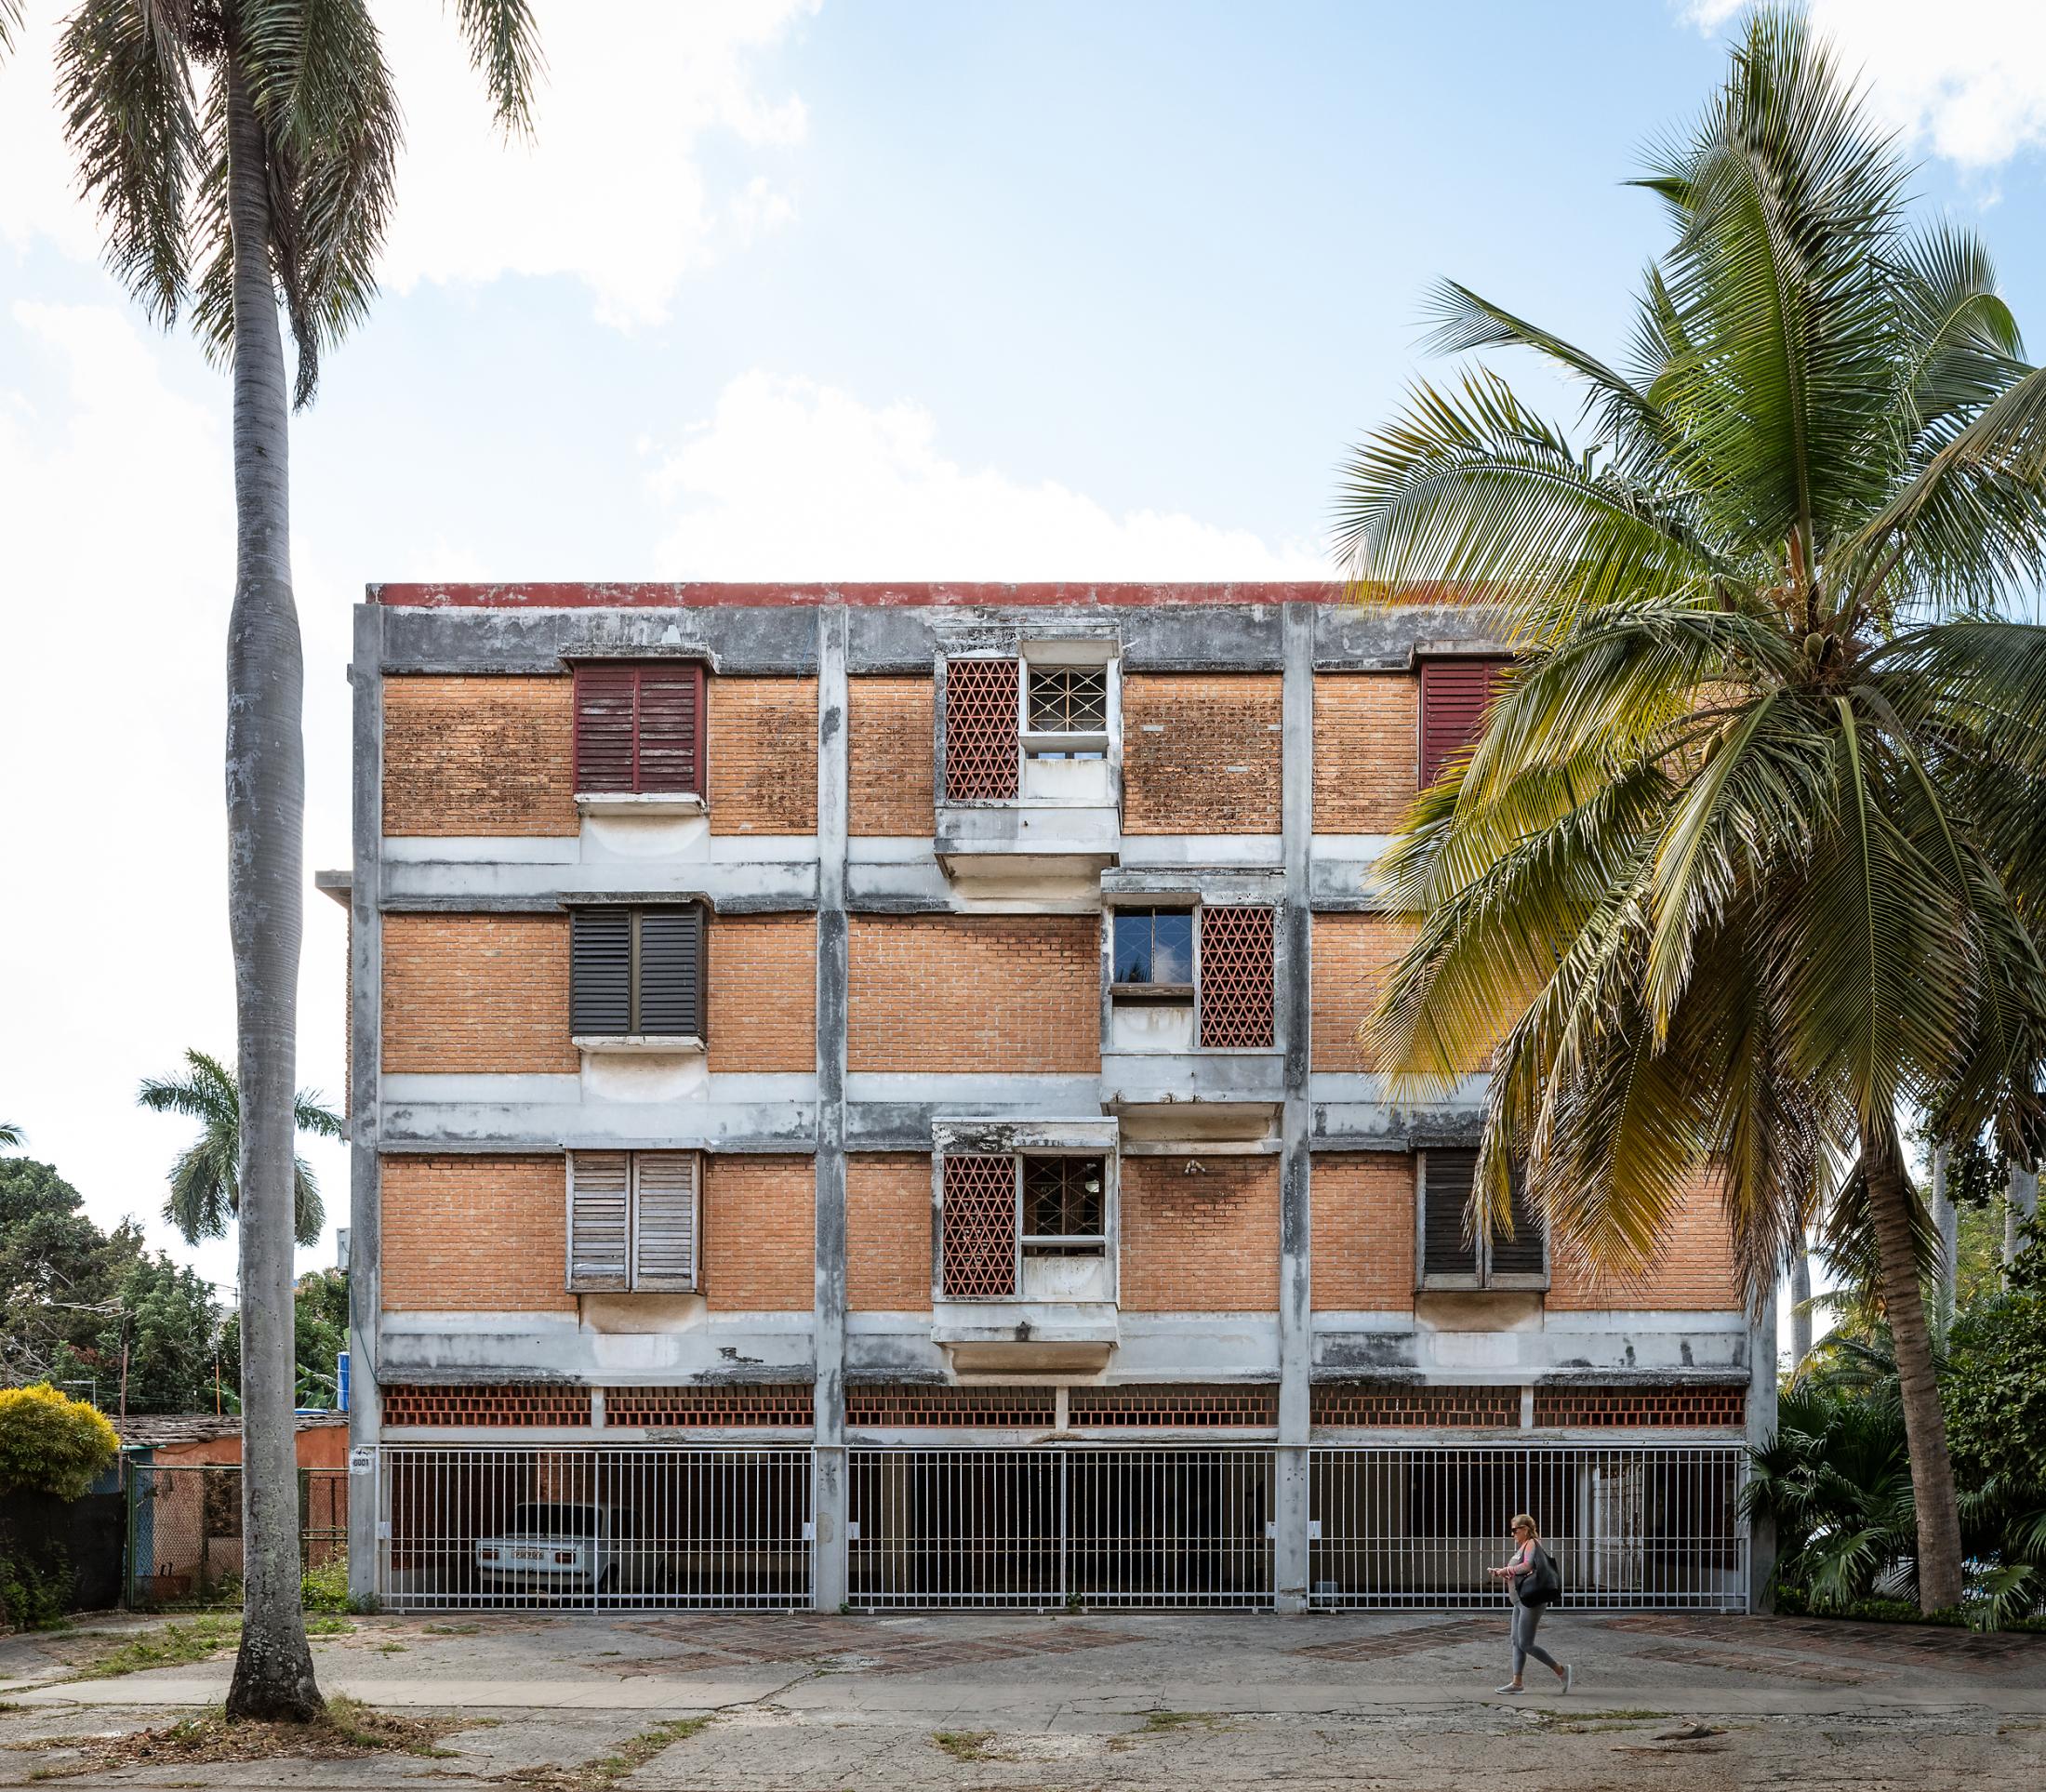 Cuban Modernist Architecture in Havana - Apartamento Evangelina de Vidana / Evangelina de Vidana Apartment Building